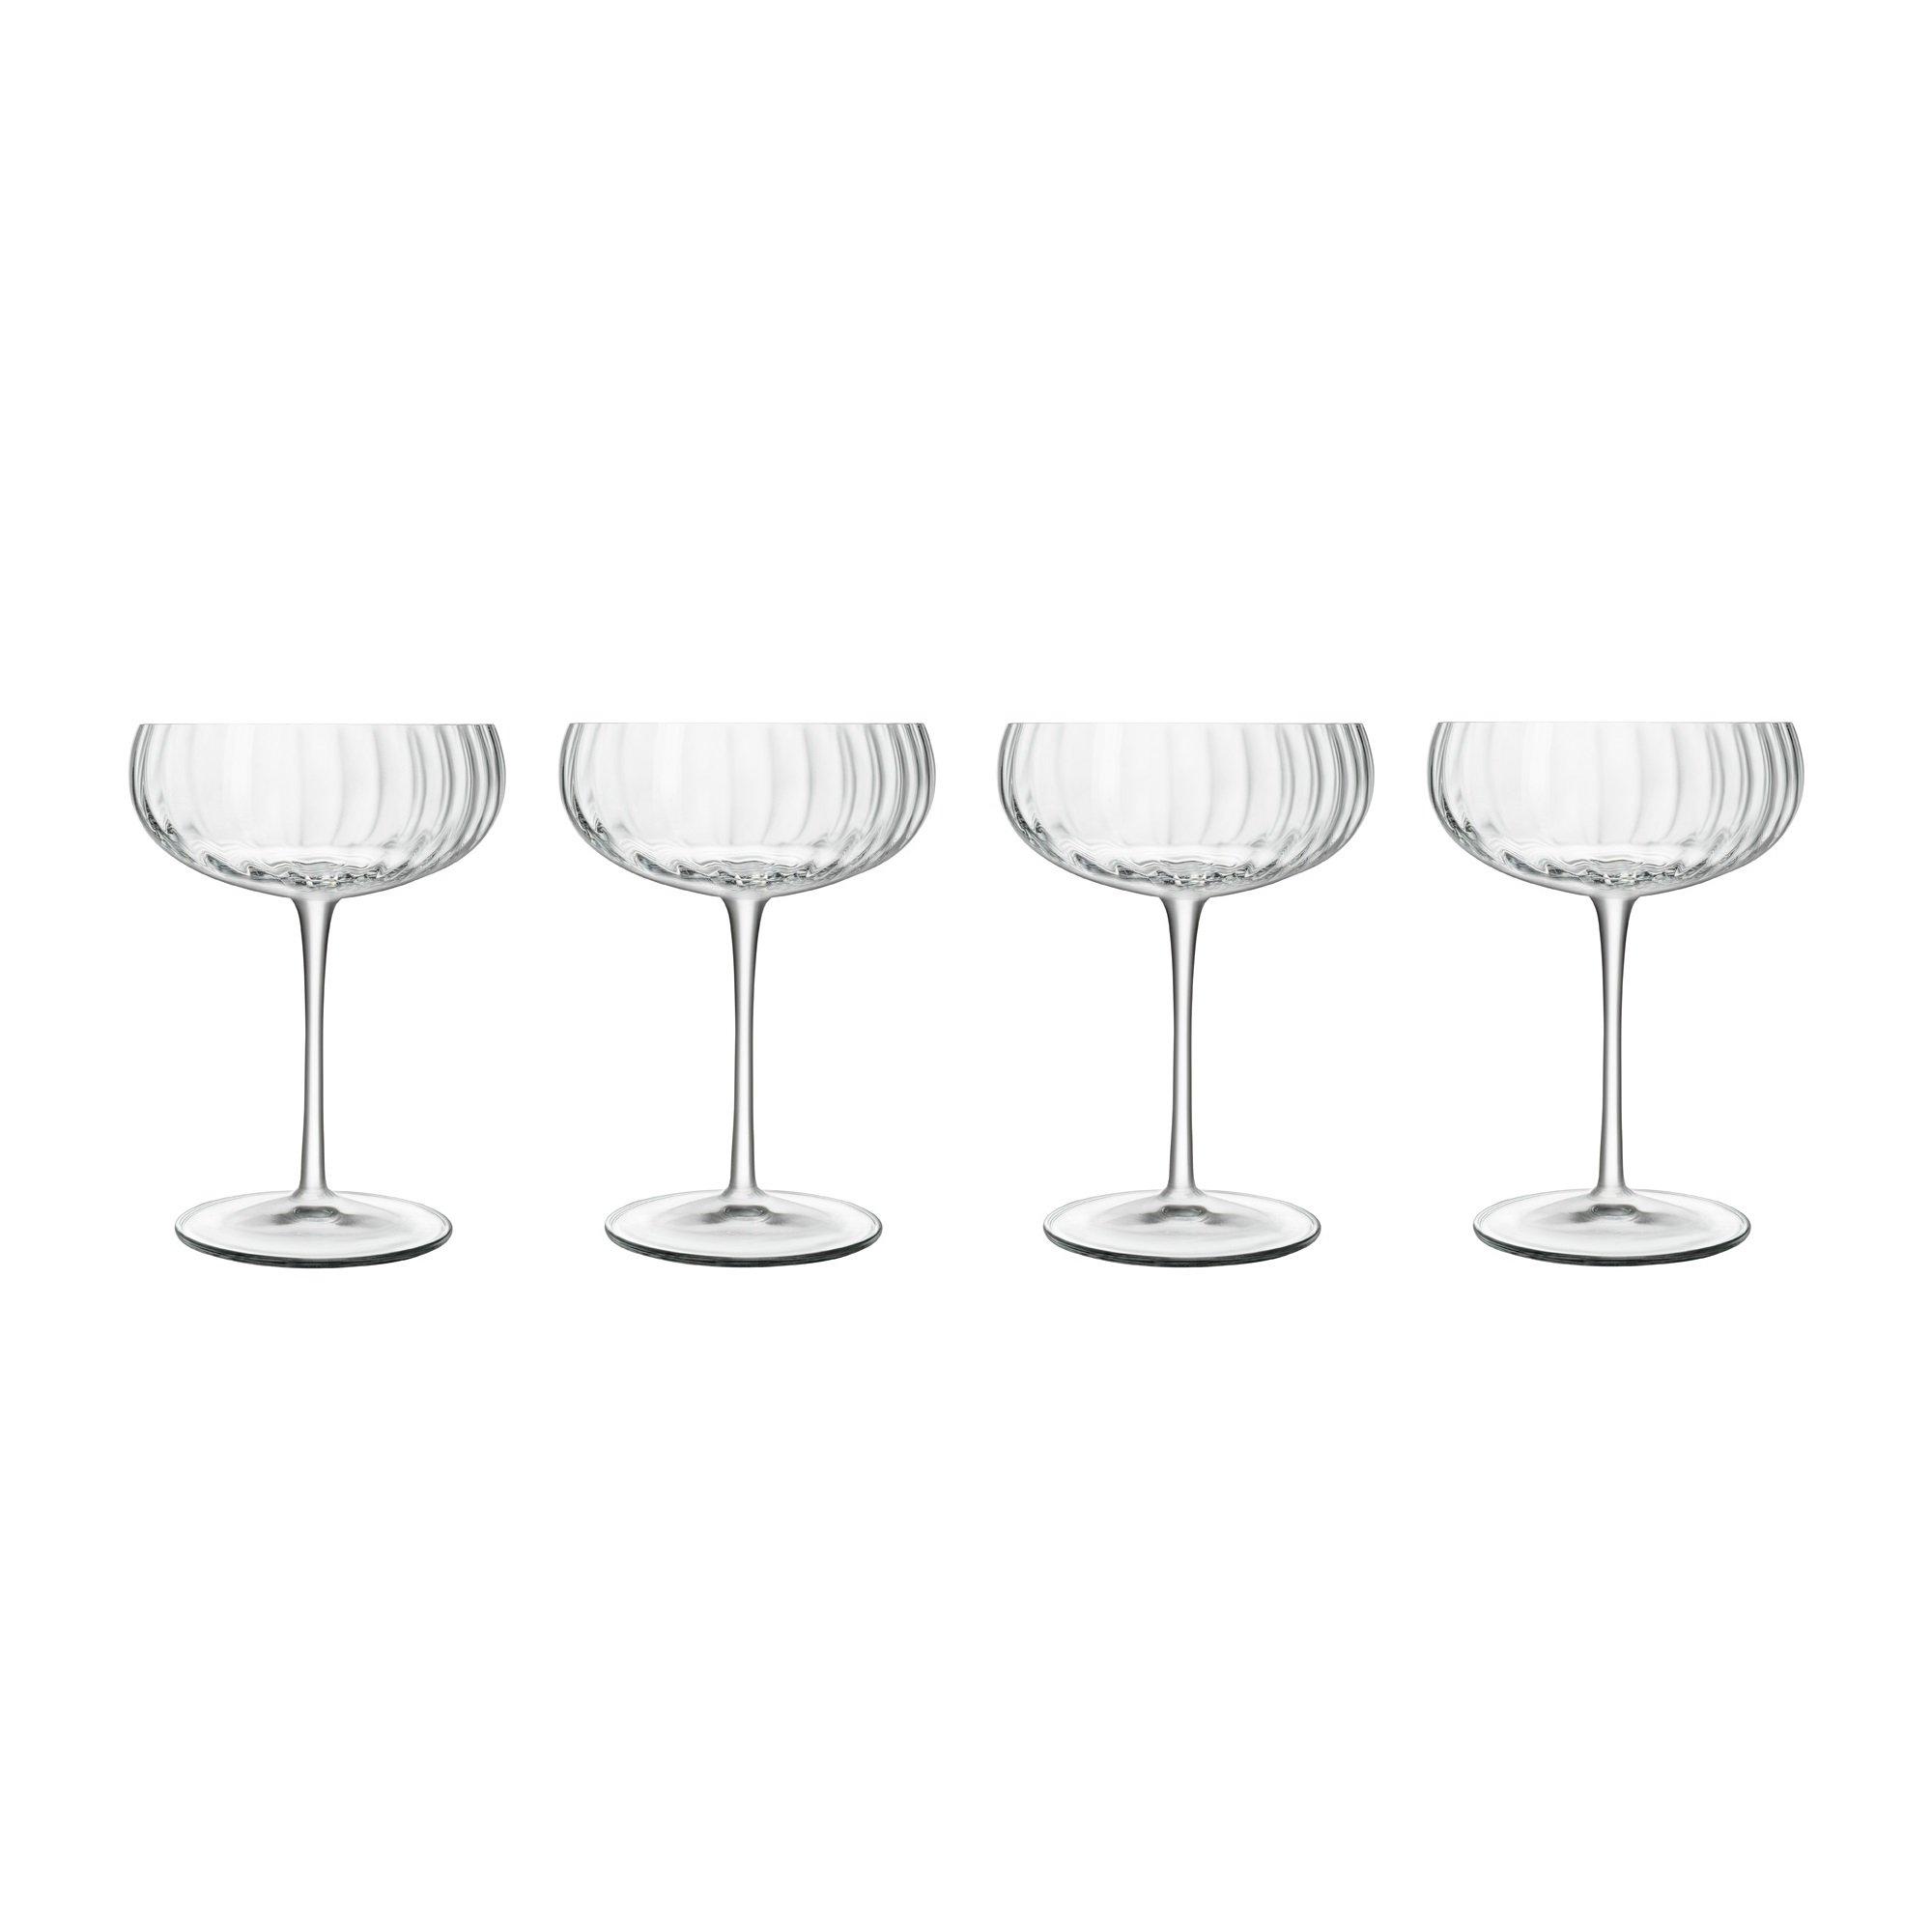 Optica Champagne Glasses - Dishwasher Safe, 300 ml - Pack of 4